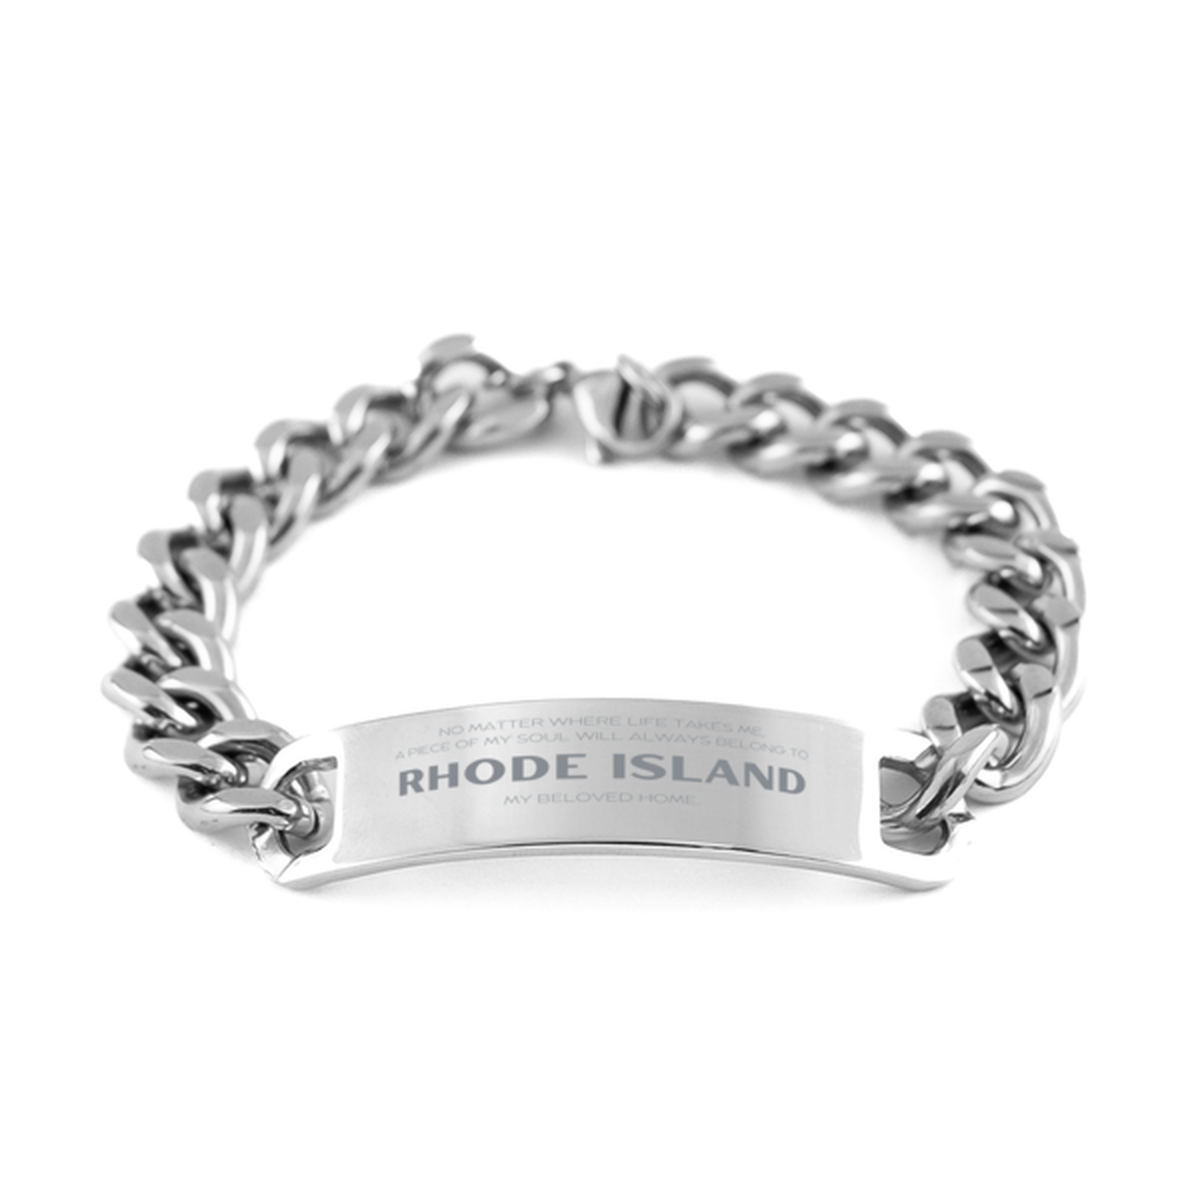 Love Rhode Island State Gifts, My soul will always belong to Rhode Island, Proud Cuban Chain Stainless Steel Bracelet, Birthday Unique Gifts For Rhode Island Men, Women, Friends